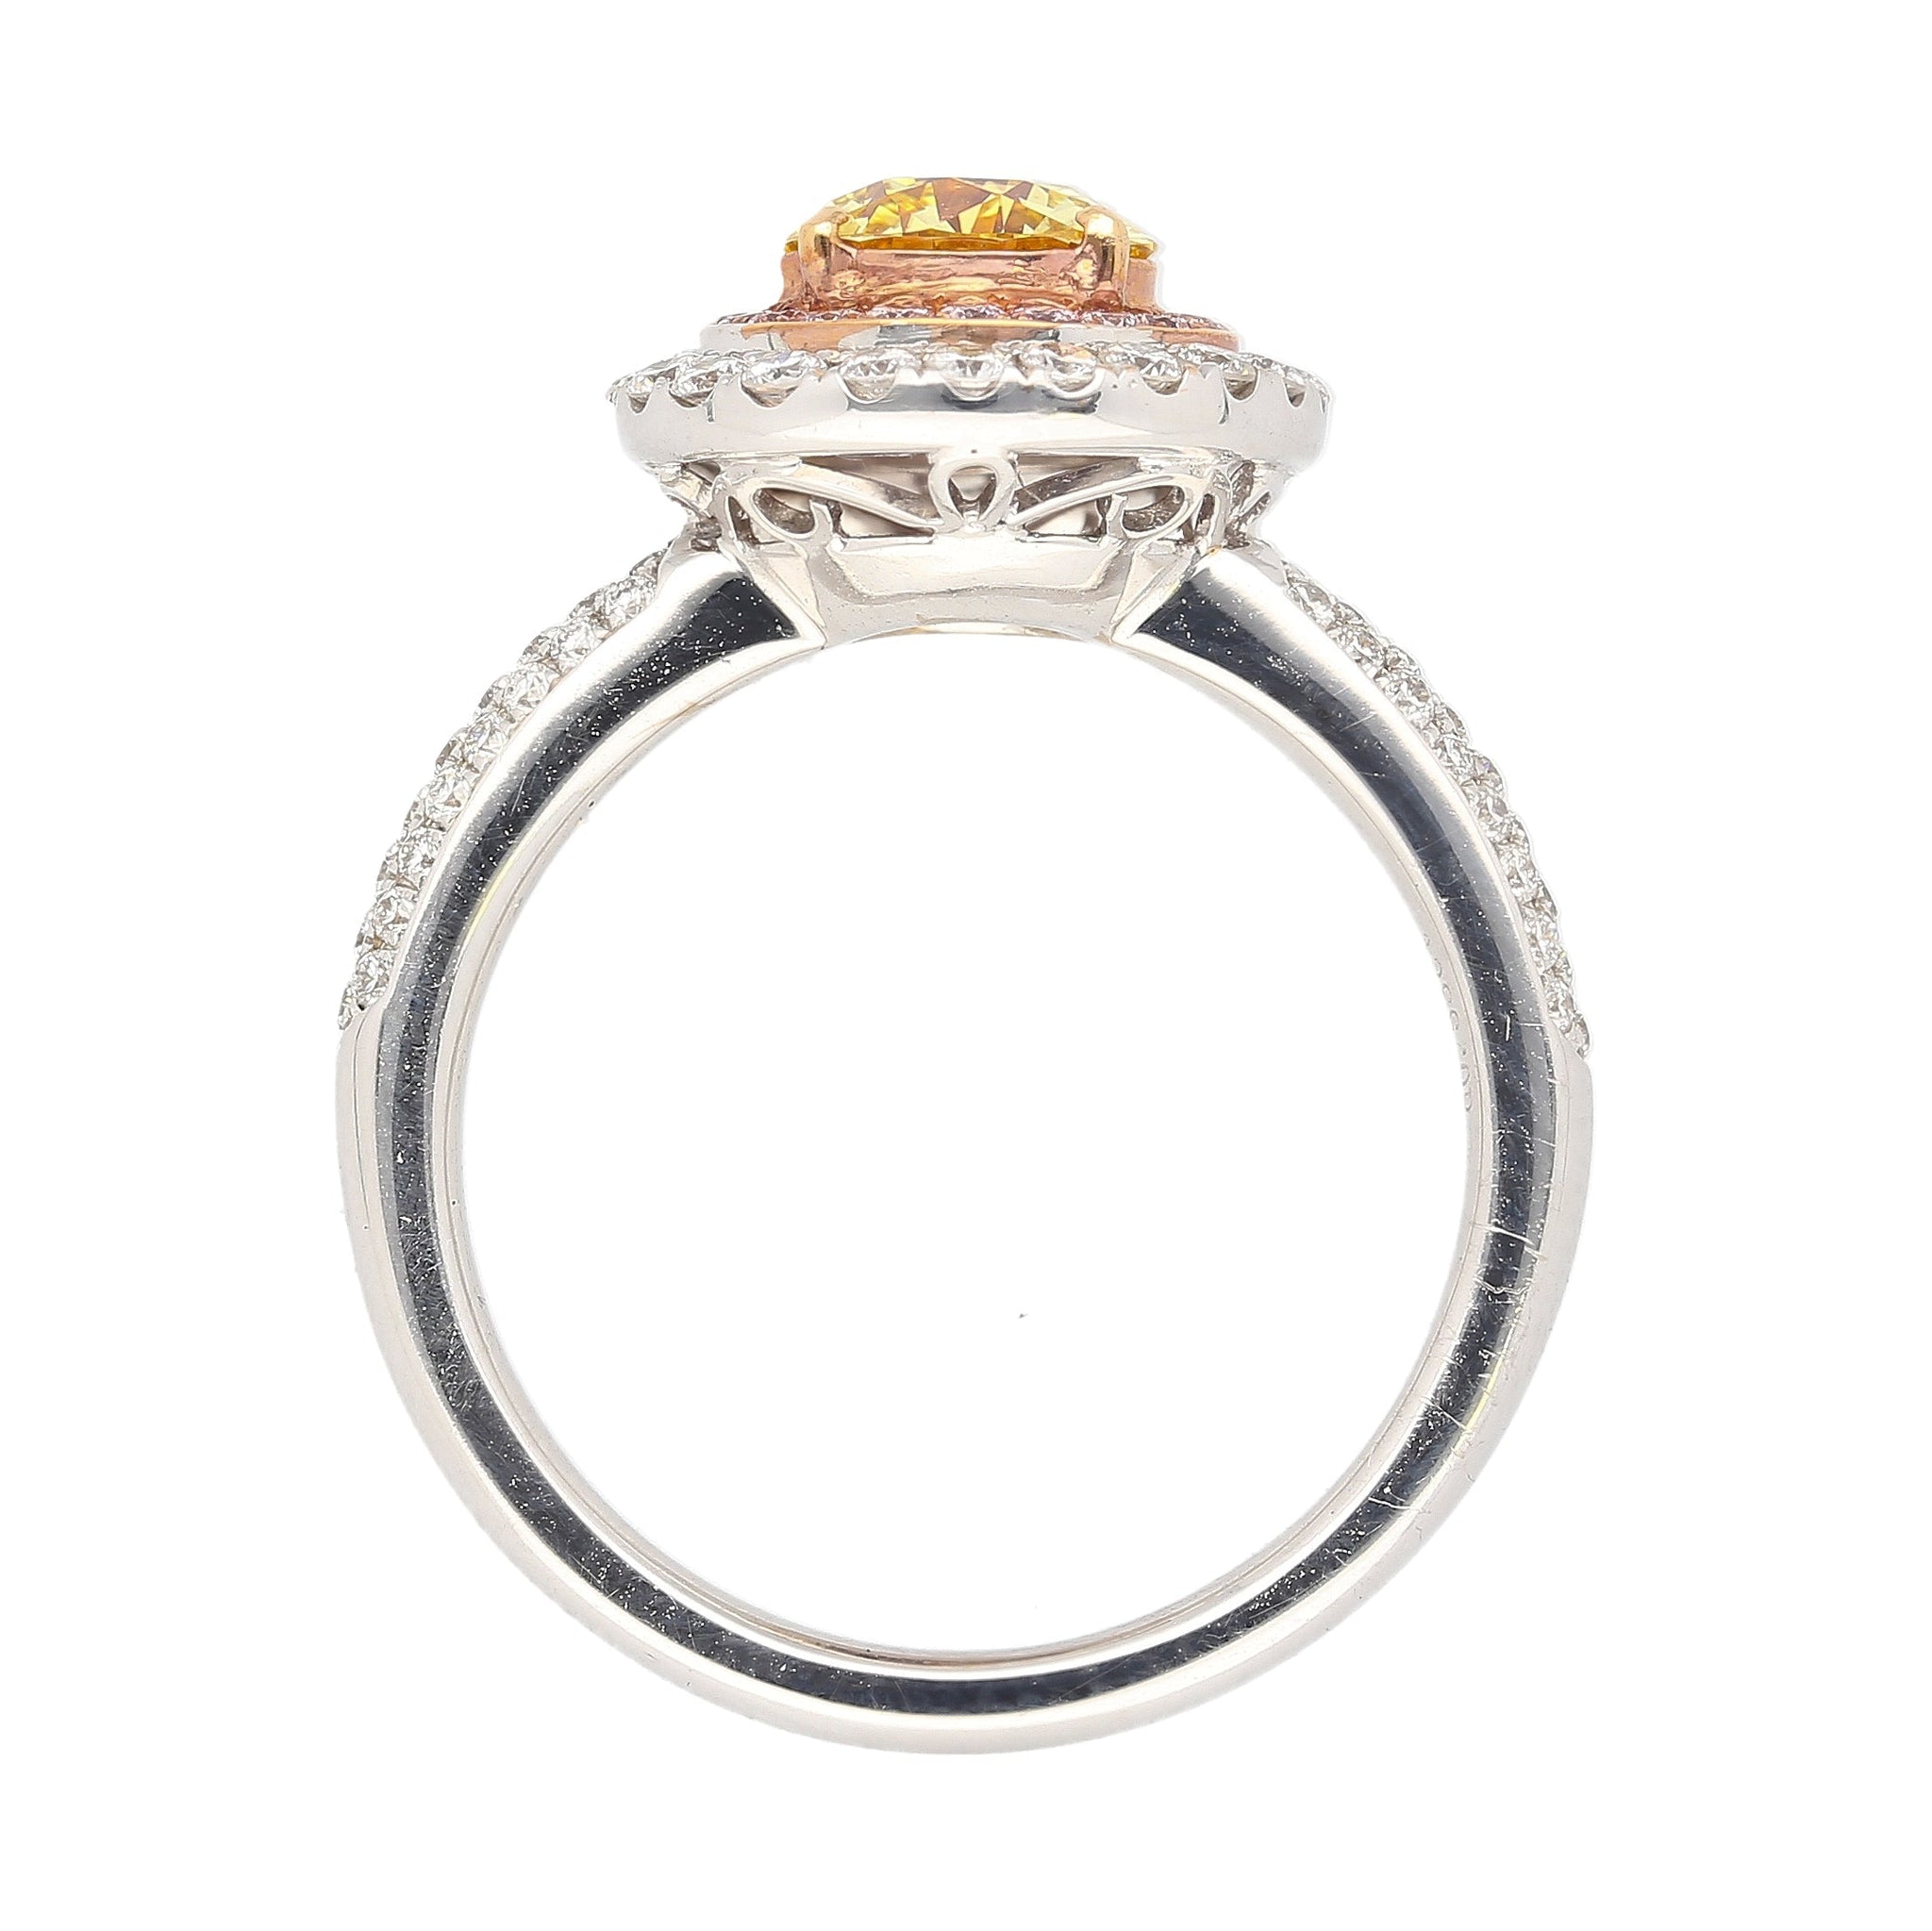 GIA Certified 1.01 Carat Round Cut Fancy Yellow Diamond Ring